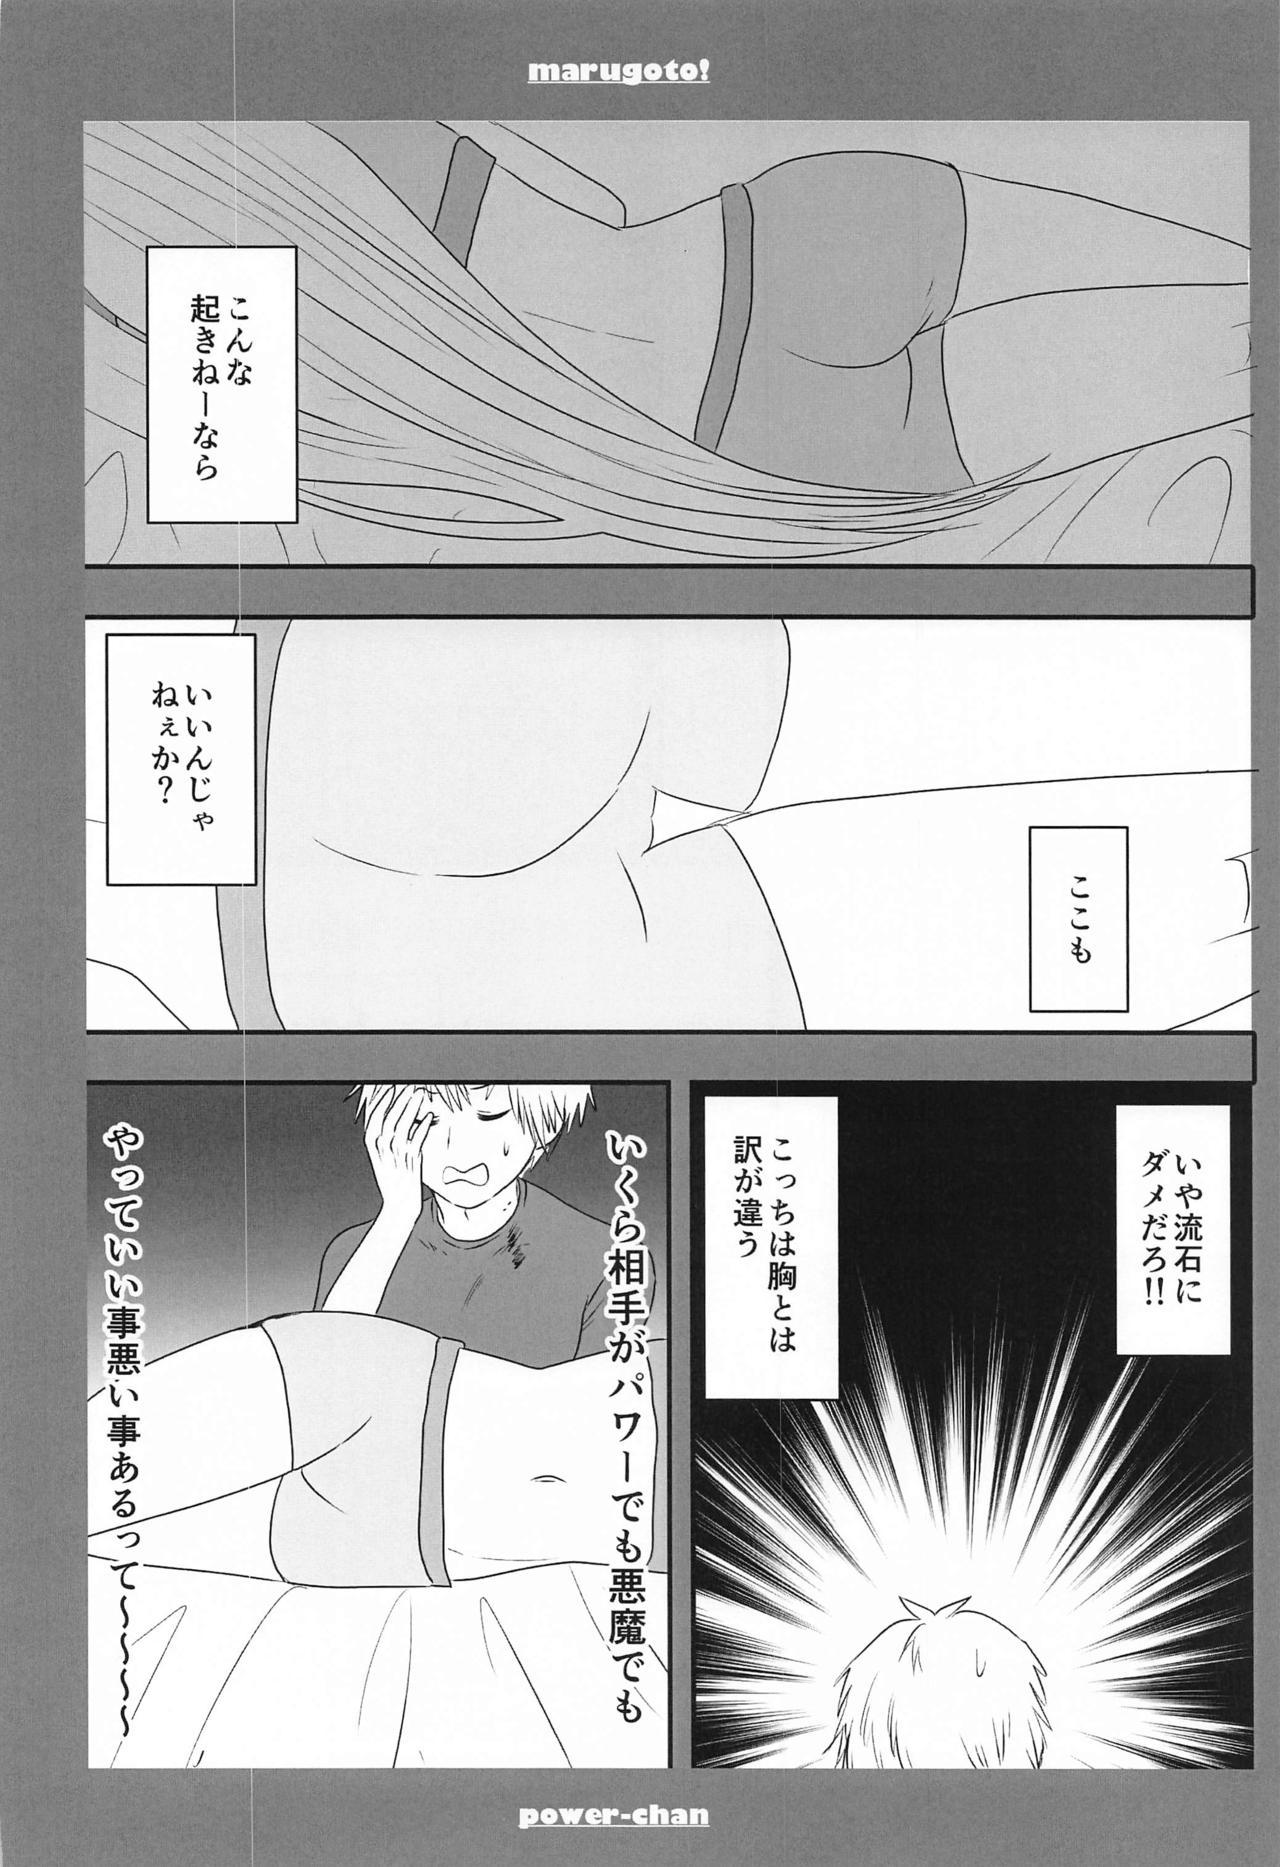 No Condom marugotoissatsudenji×pawa - Chainsaw man Stripping - Page 11